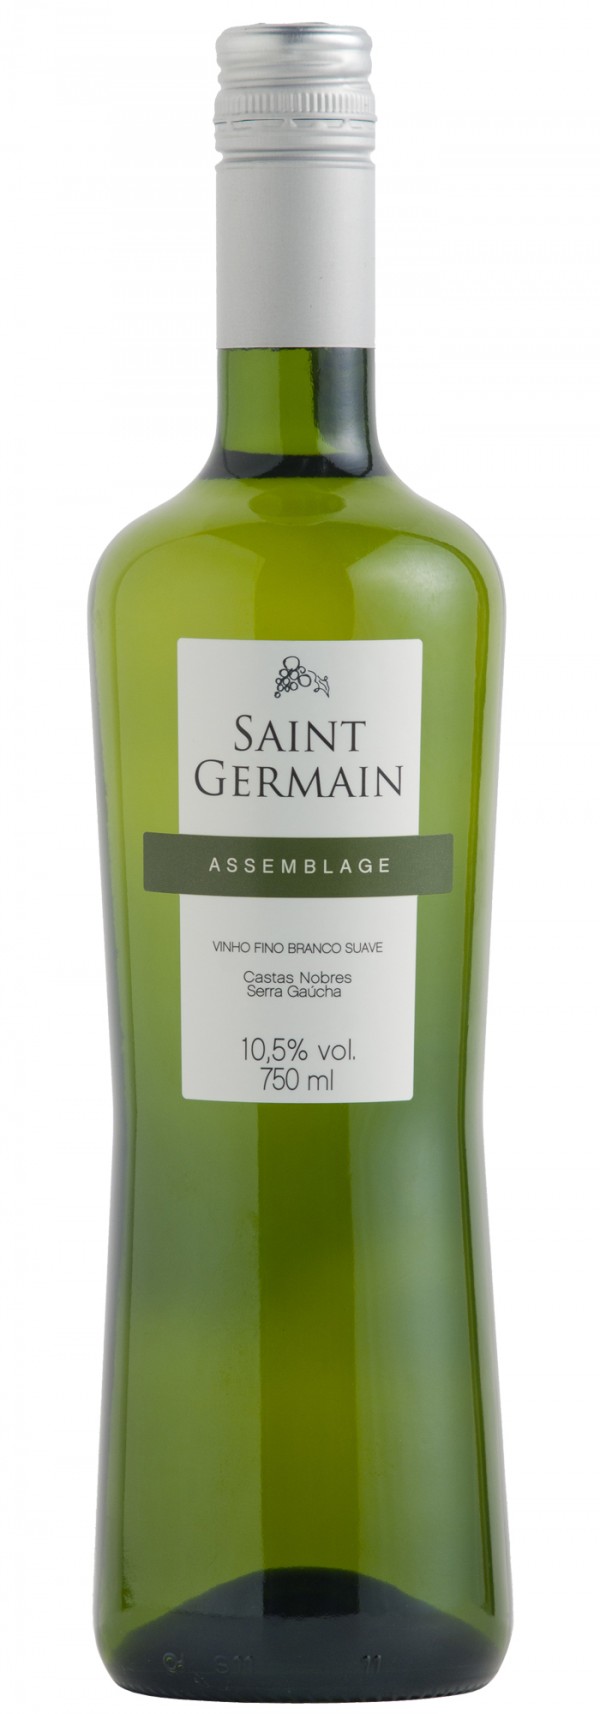 Vinho Saint Germain assemblage branco suave 750 ml